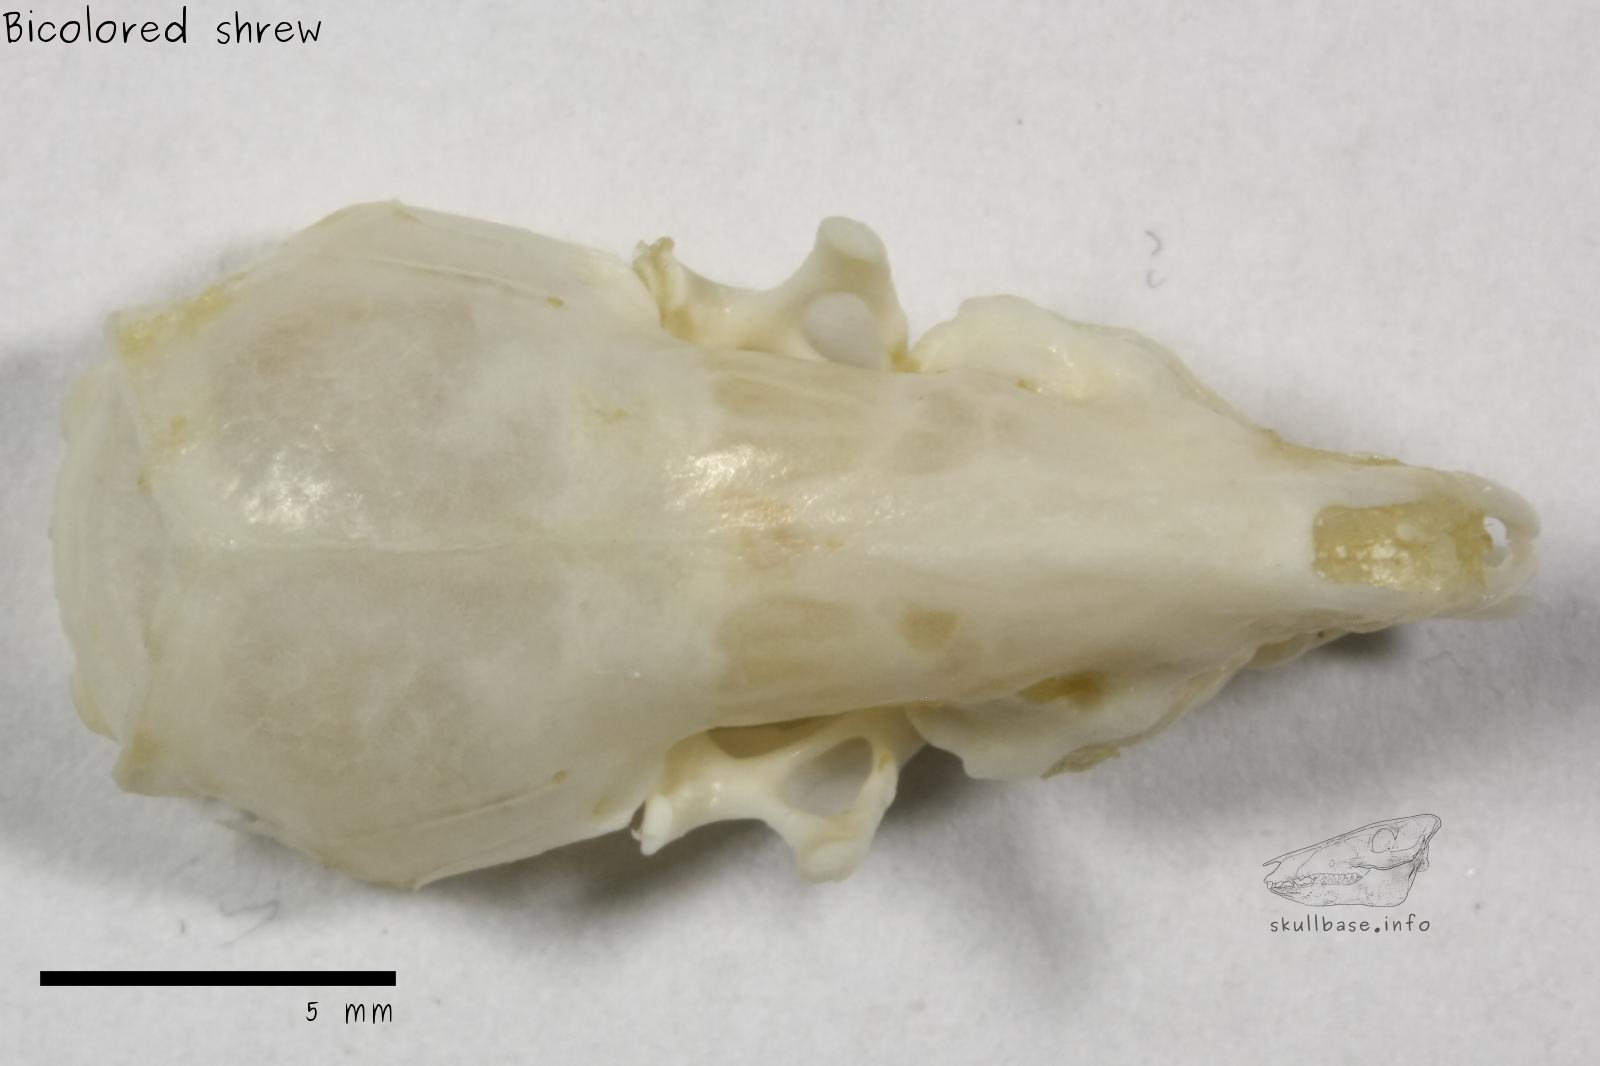 Bicolored shrew (Crocidura leucodon) skull dorsal view